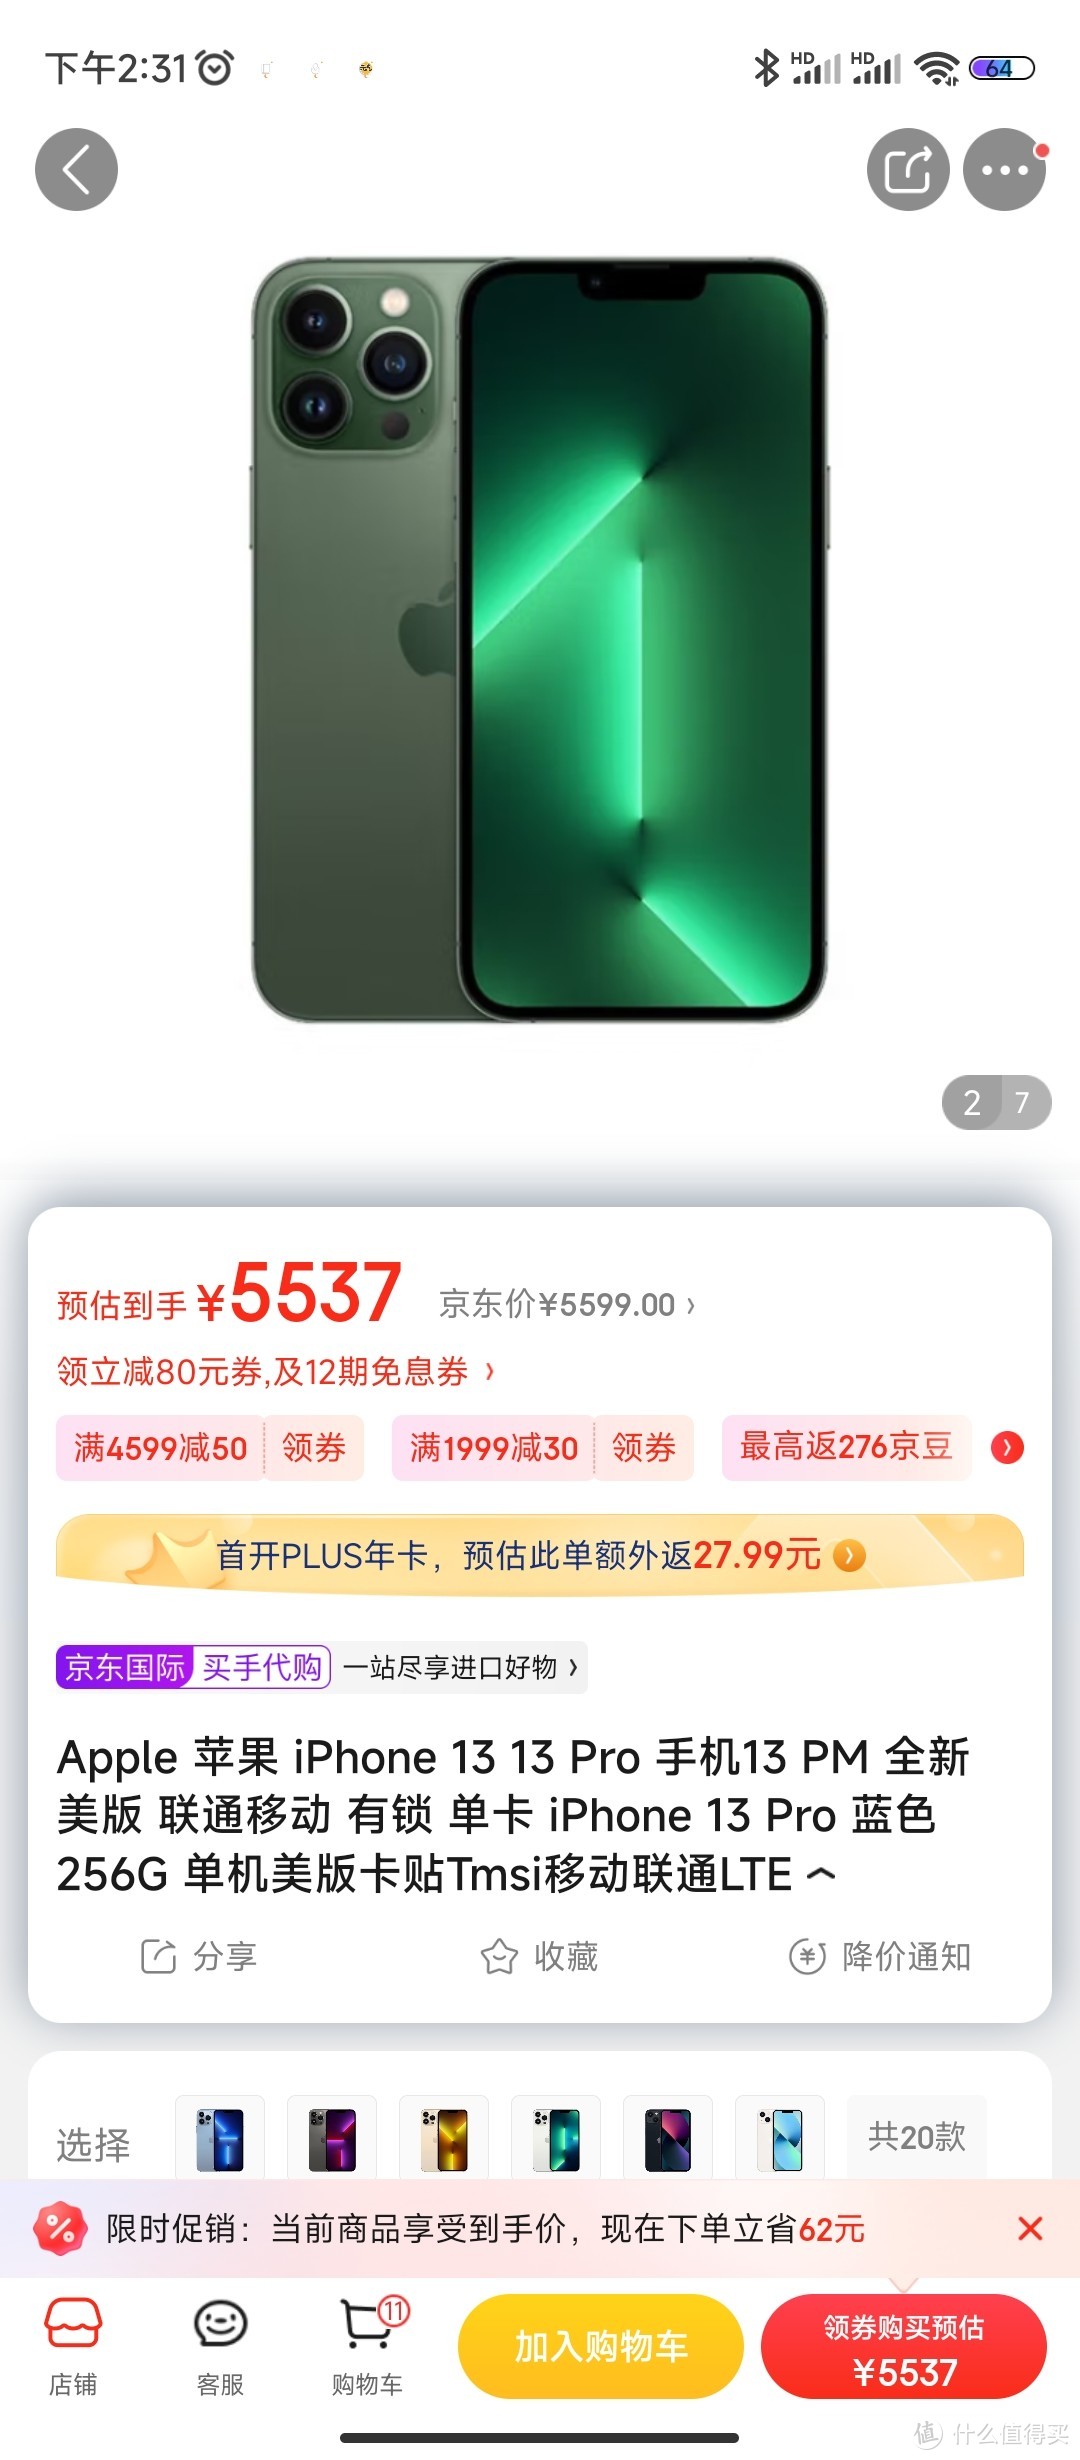 Apple 苹果 iPhone 13 13 Pro 手机13 PM 全新 美版 联通移动 有锁 单卡 iPhone 13 Pro 蓝色 256G 单机Apple